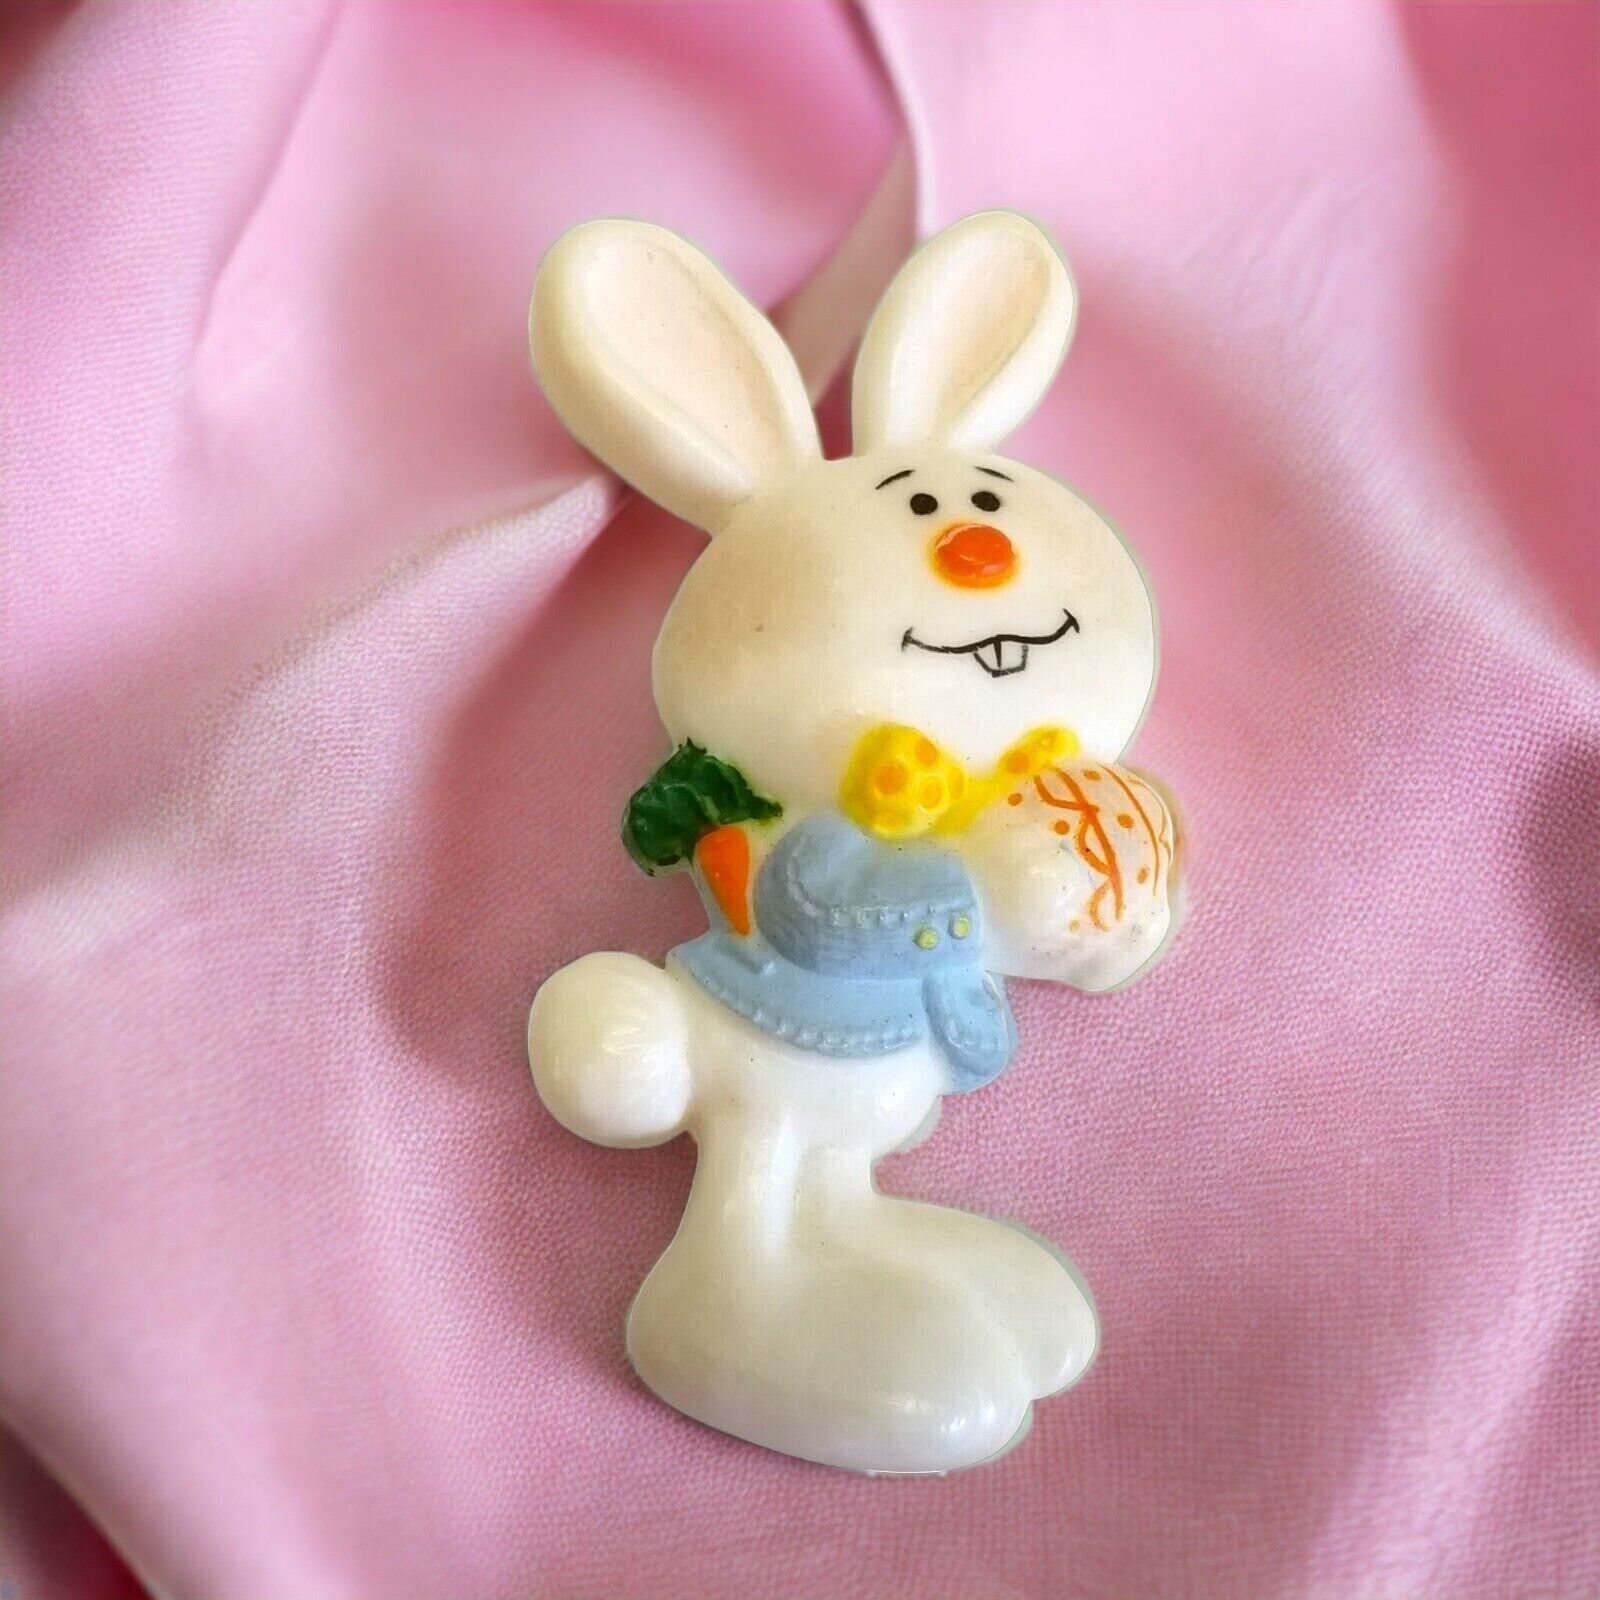 White Rabbit Brooch Pin Easter Egg Hallmark Vintage 1975 BARNABY Bunny Holiday - $12.93